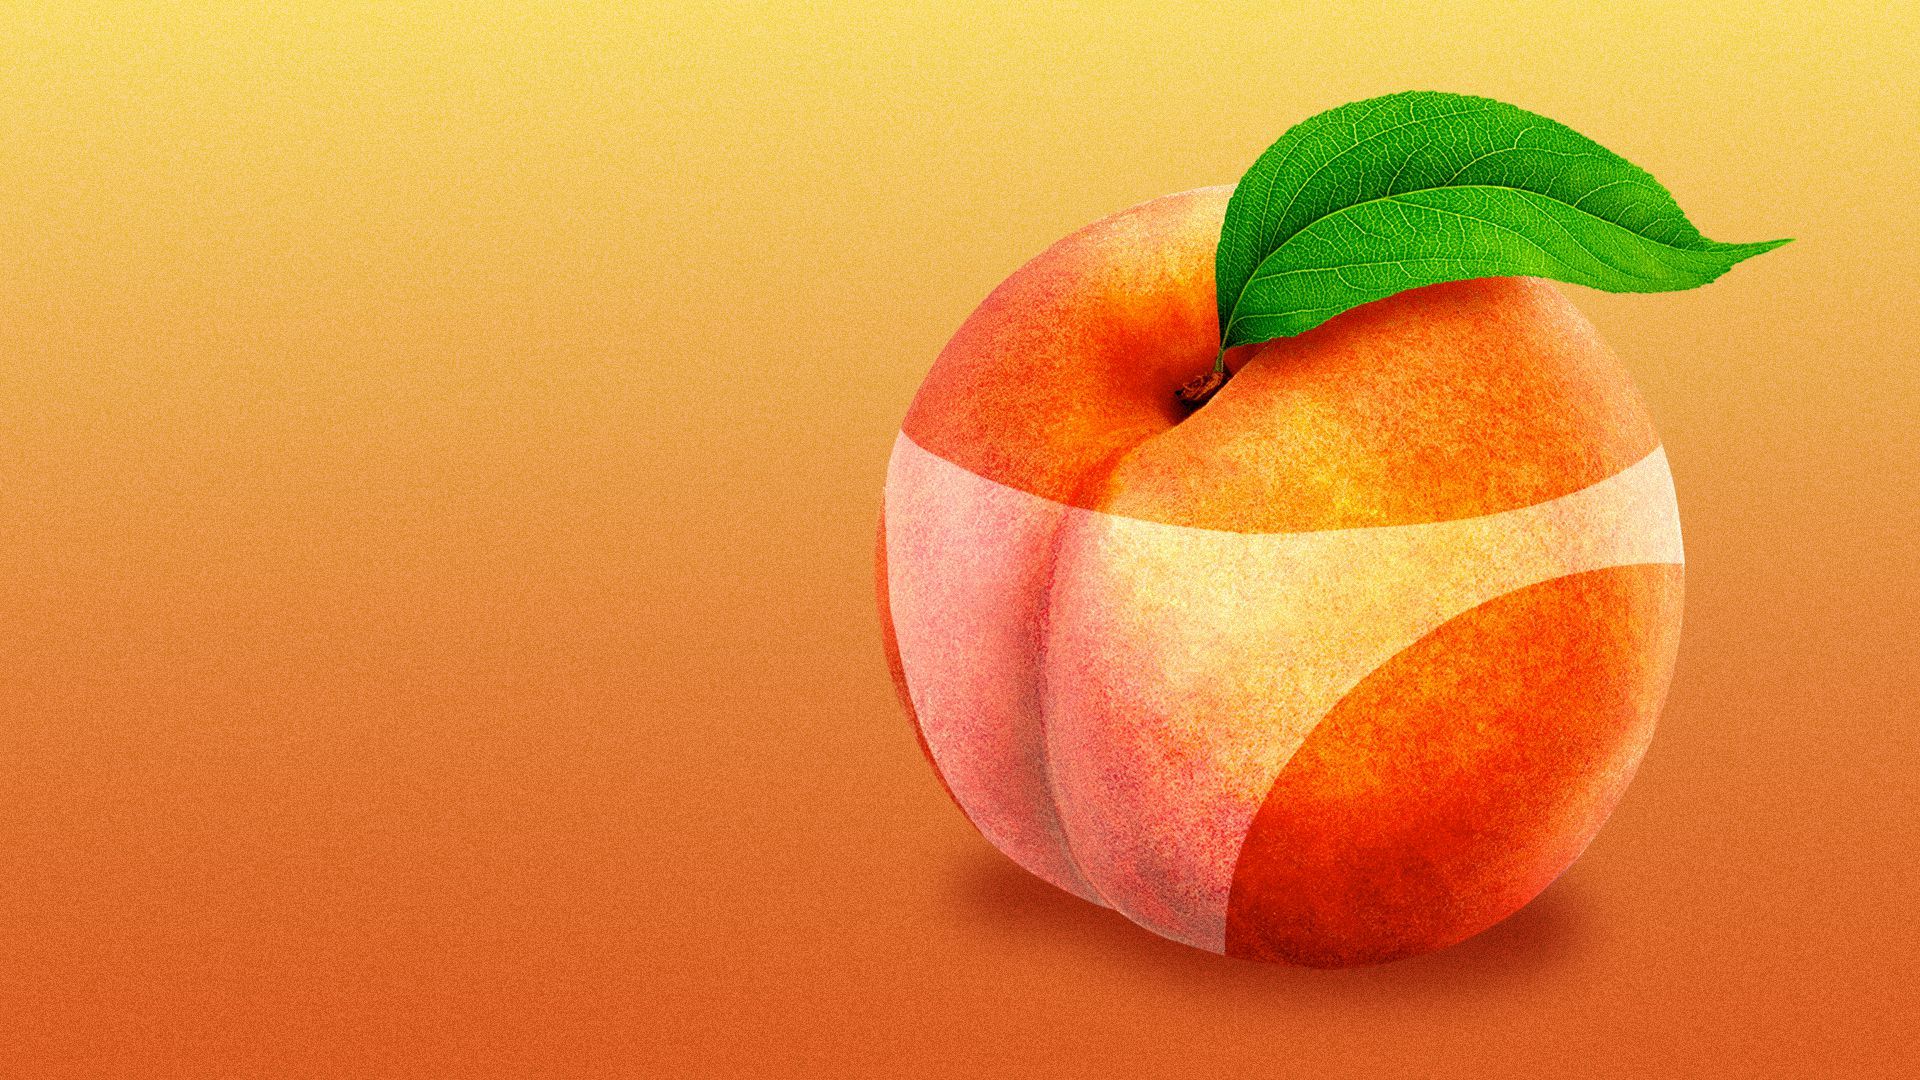 Illustration of a peach with a bikini tan line.